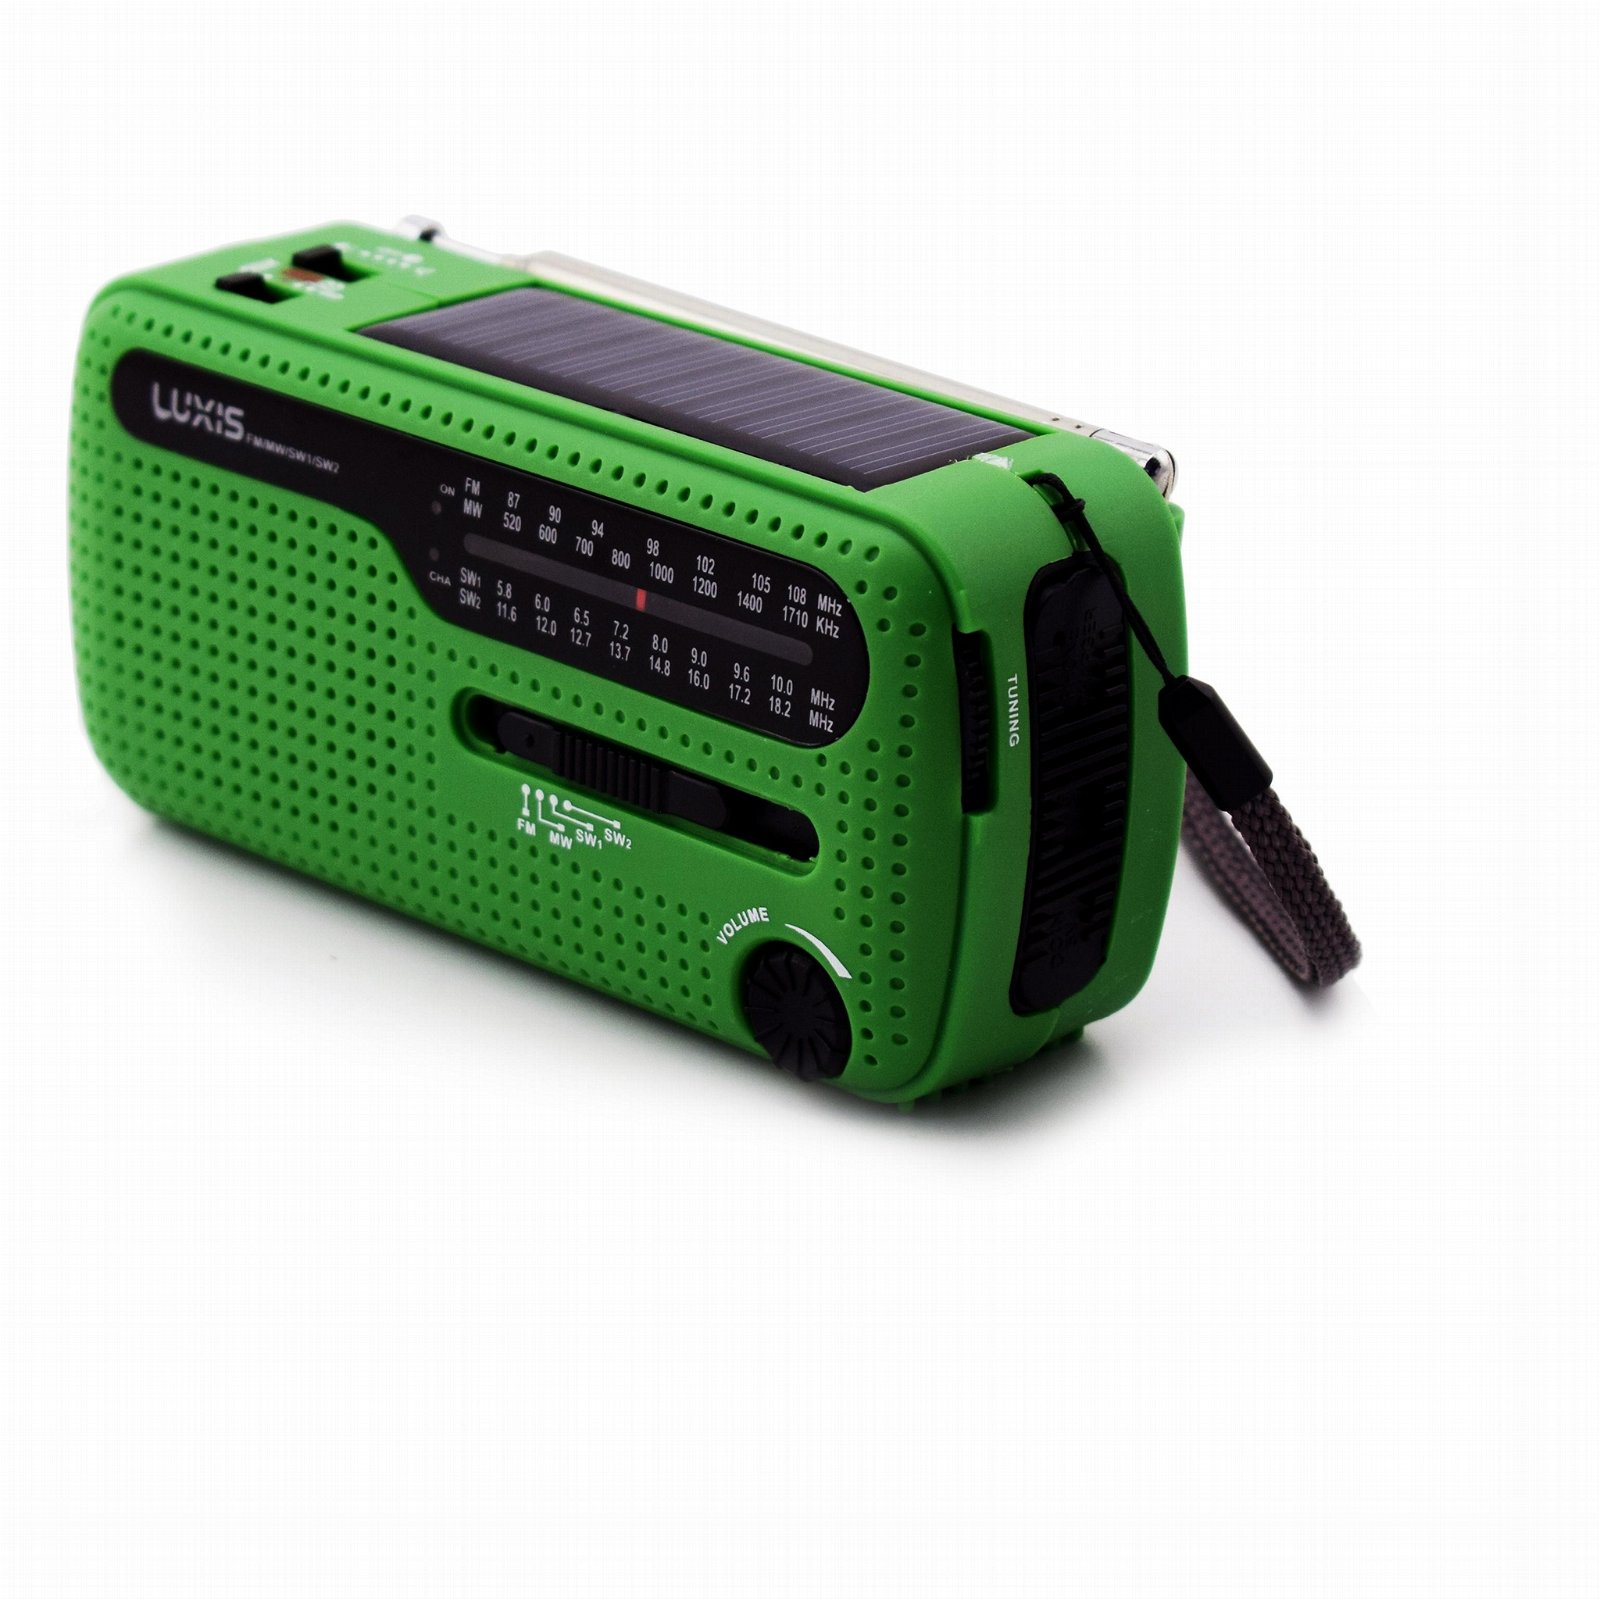 Dynamo&Solar Powered Pocket Radio with FM/Am/Sw1/Sw2, Emergency Light and Mobile 2